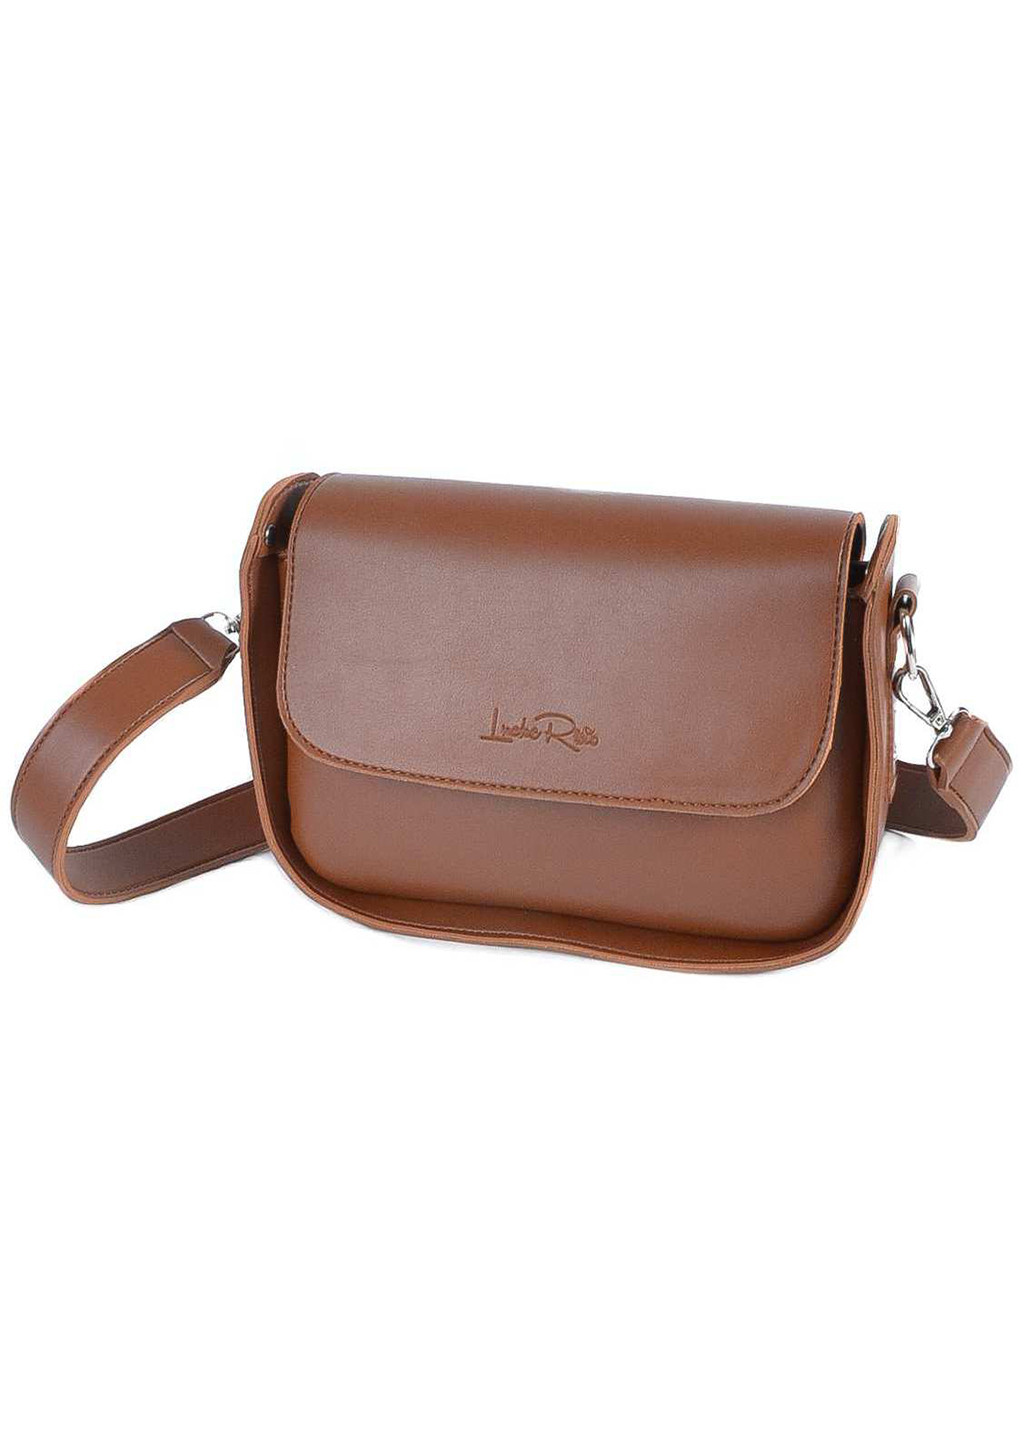 Женская сумка LucheRino 696 (266902649)